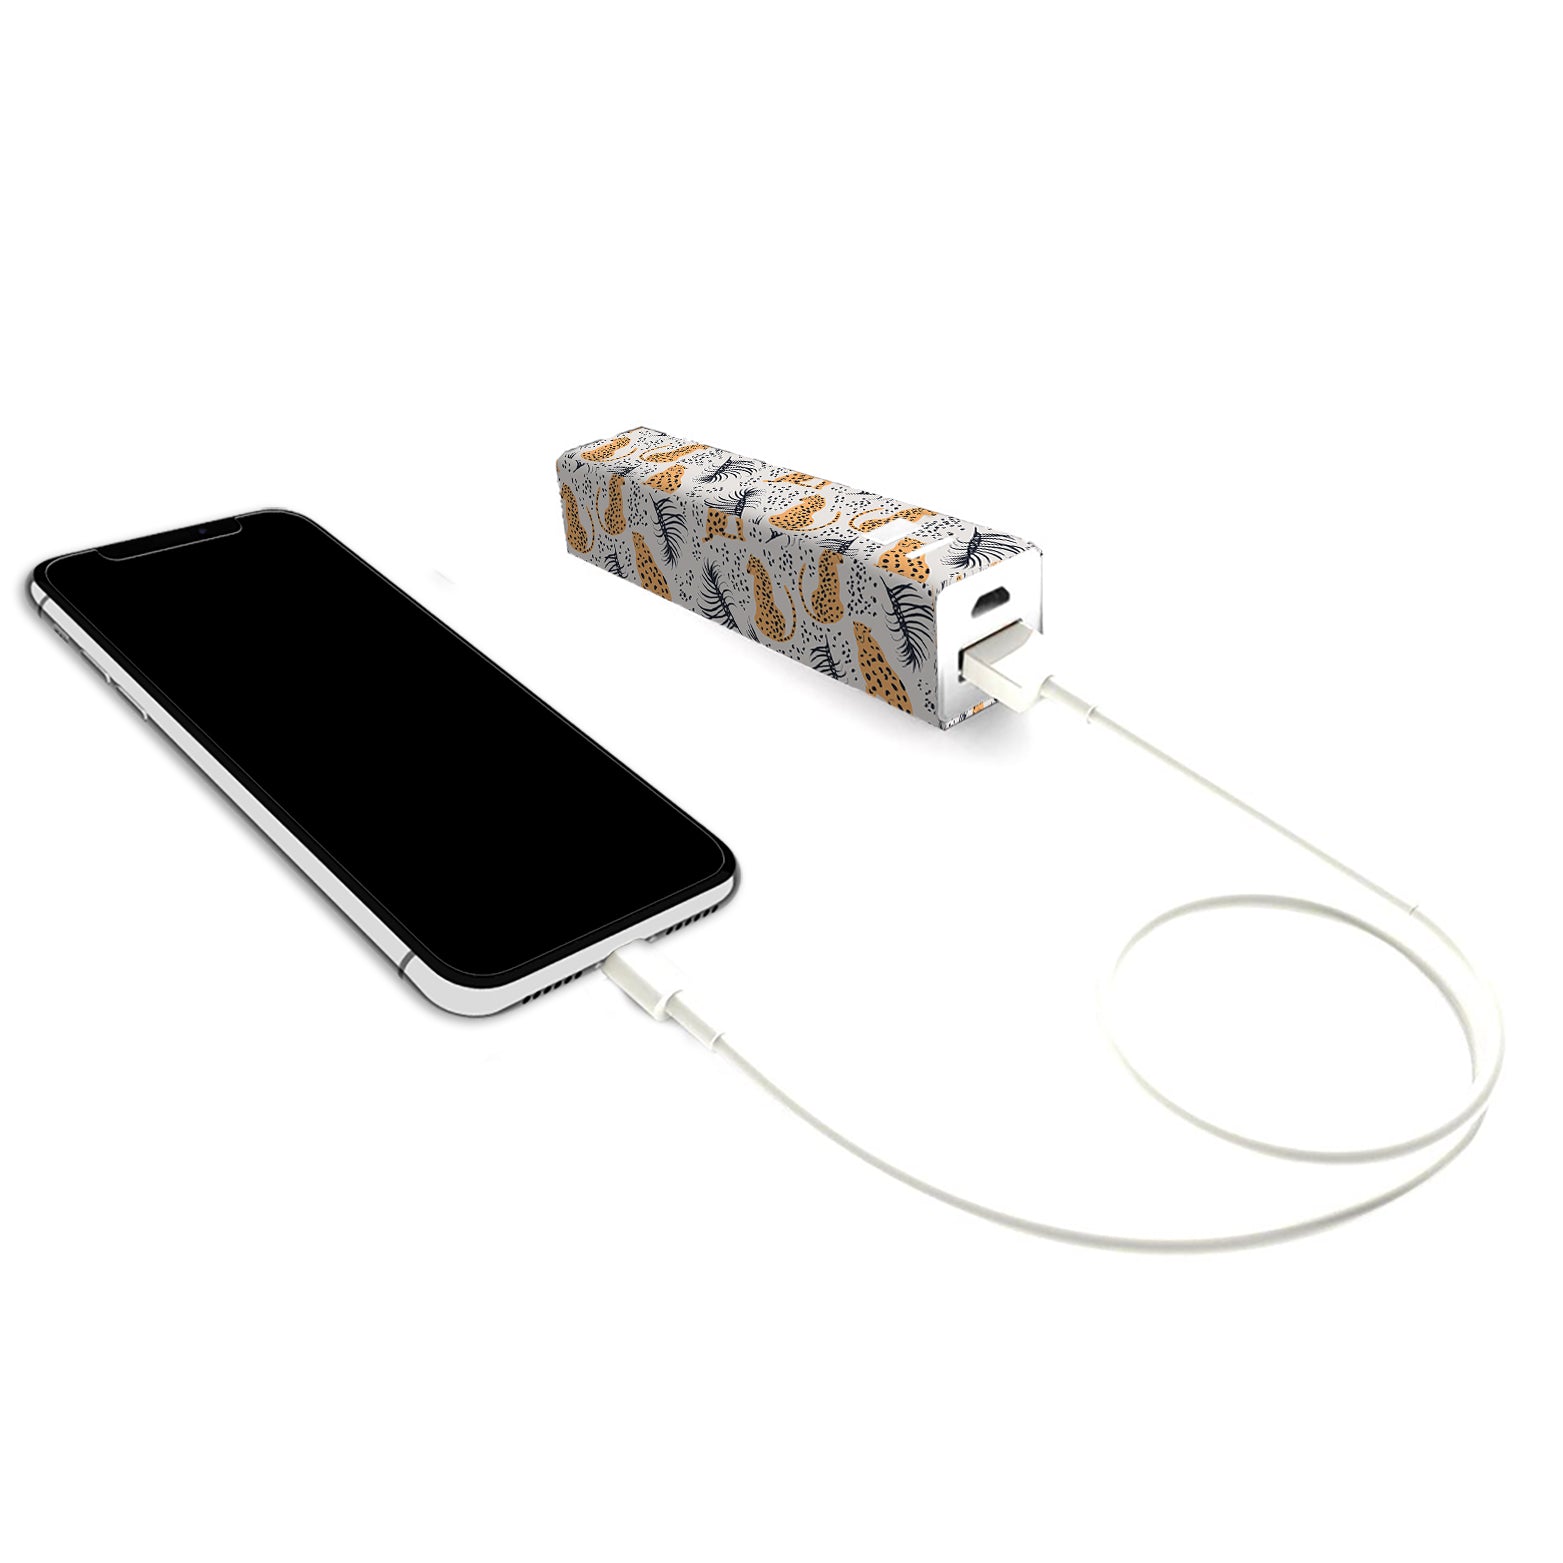 Portable Phone Charger Cheetah Lash